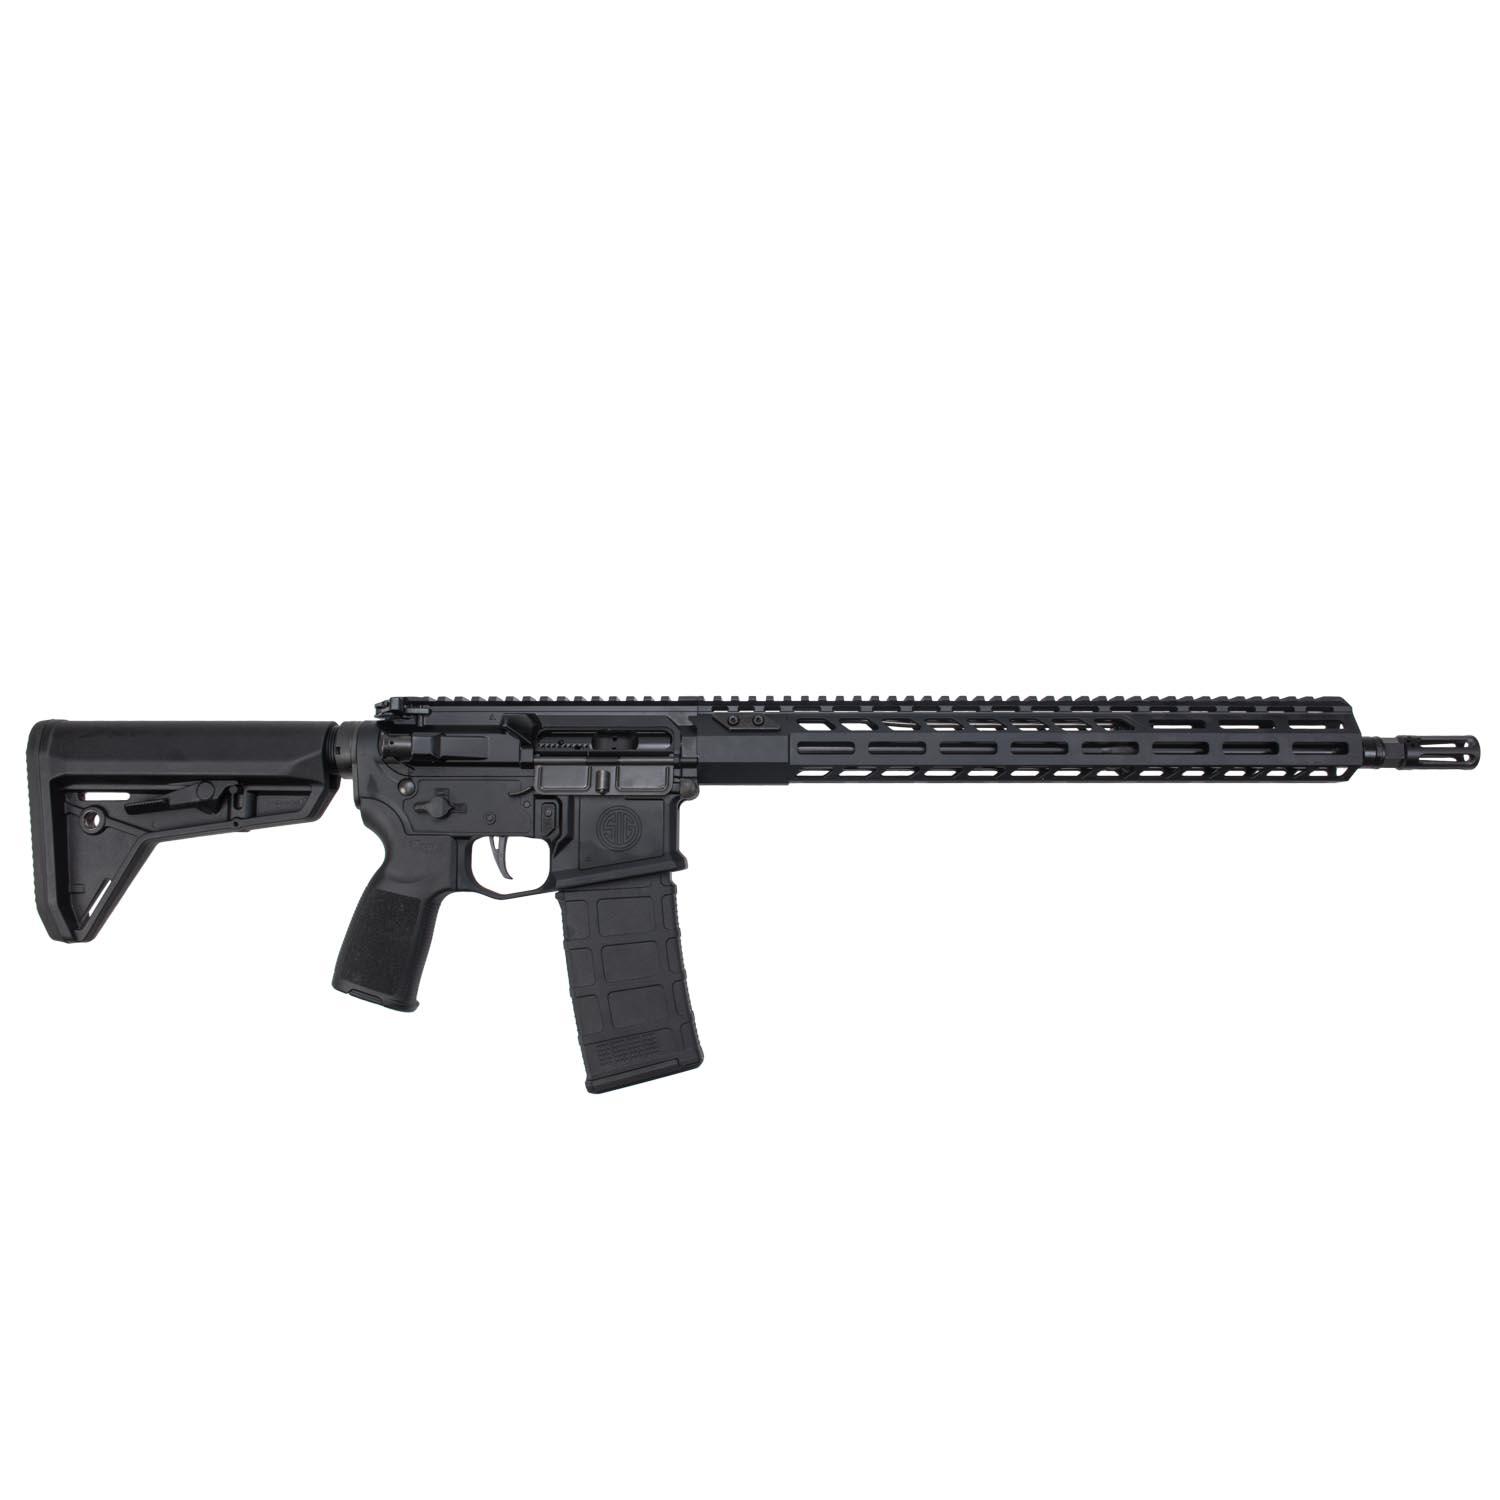 SIG SAUER SIGM400SDI 5.56 NATO 16in Black 30rd - $1299.99 (Free S/H on Firearms)